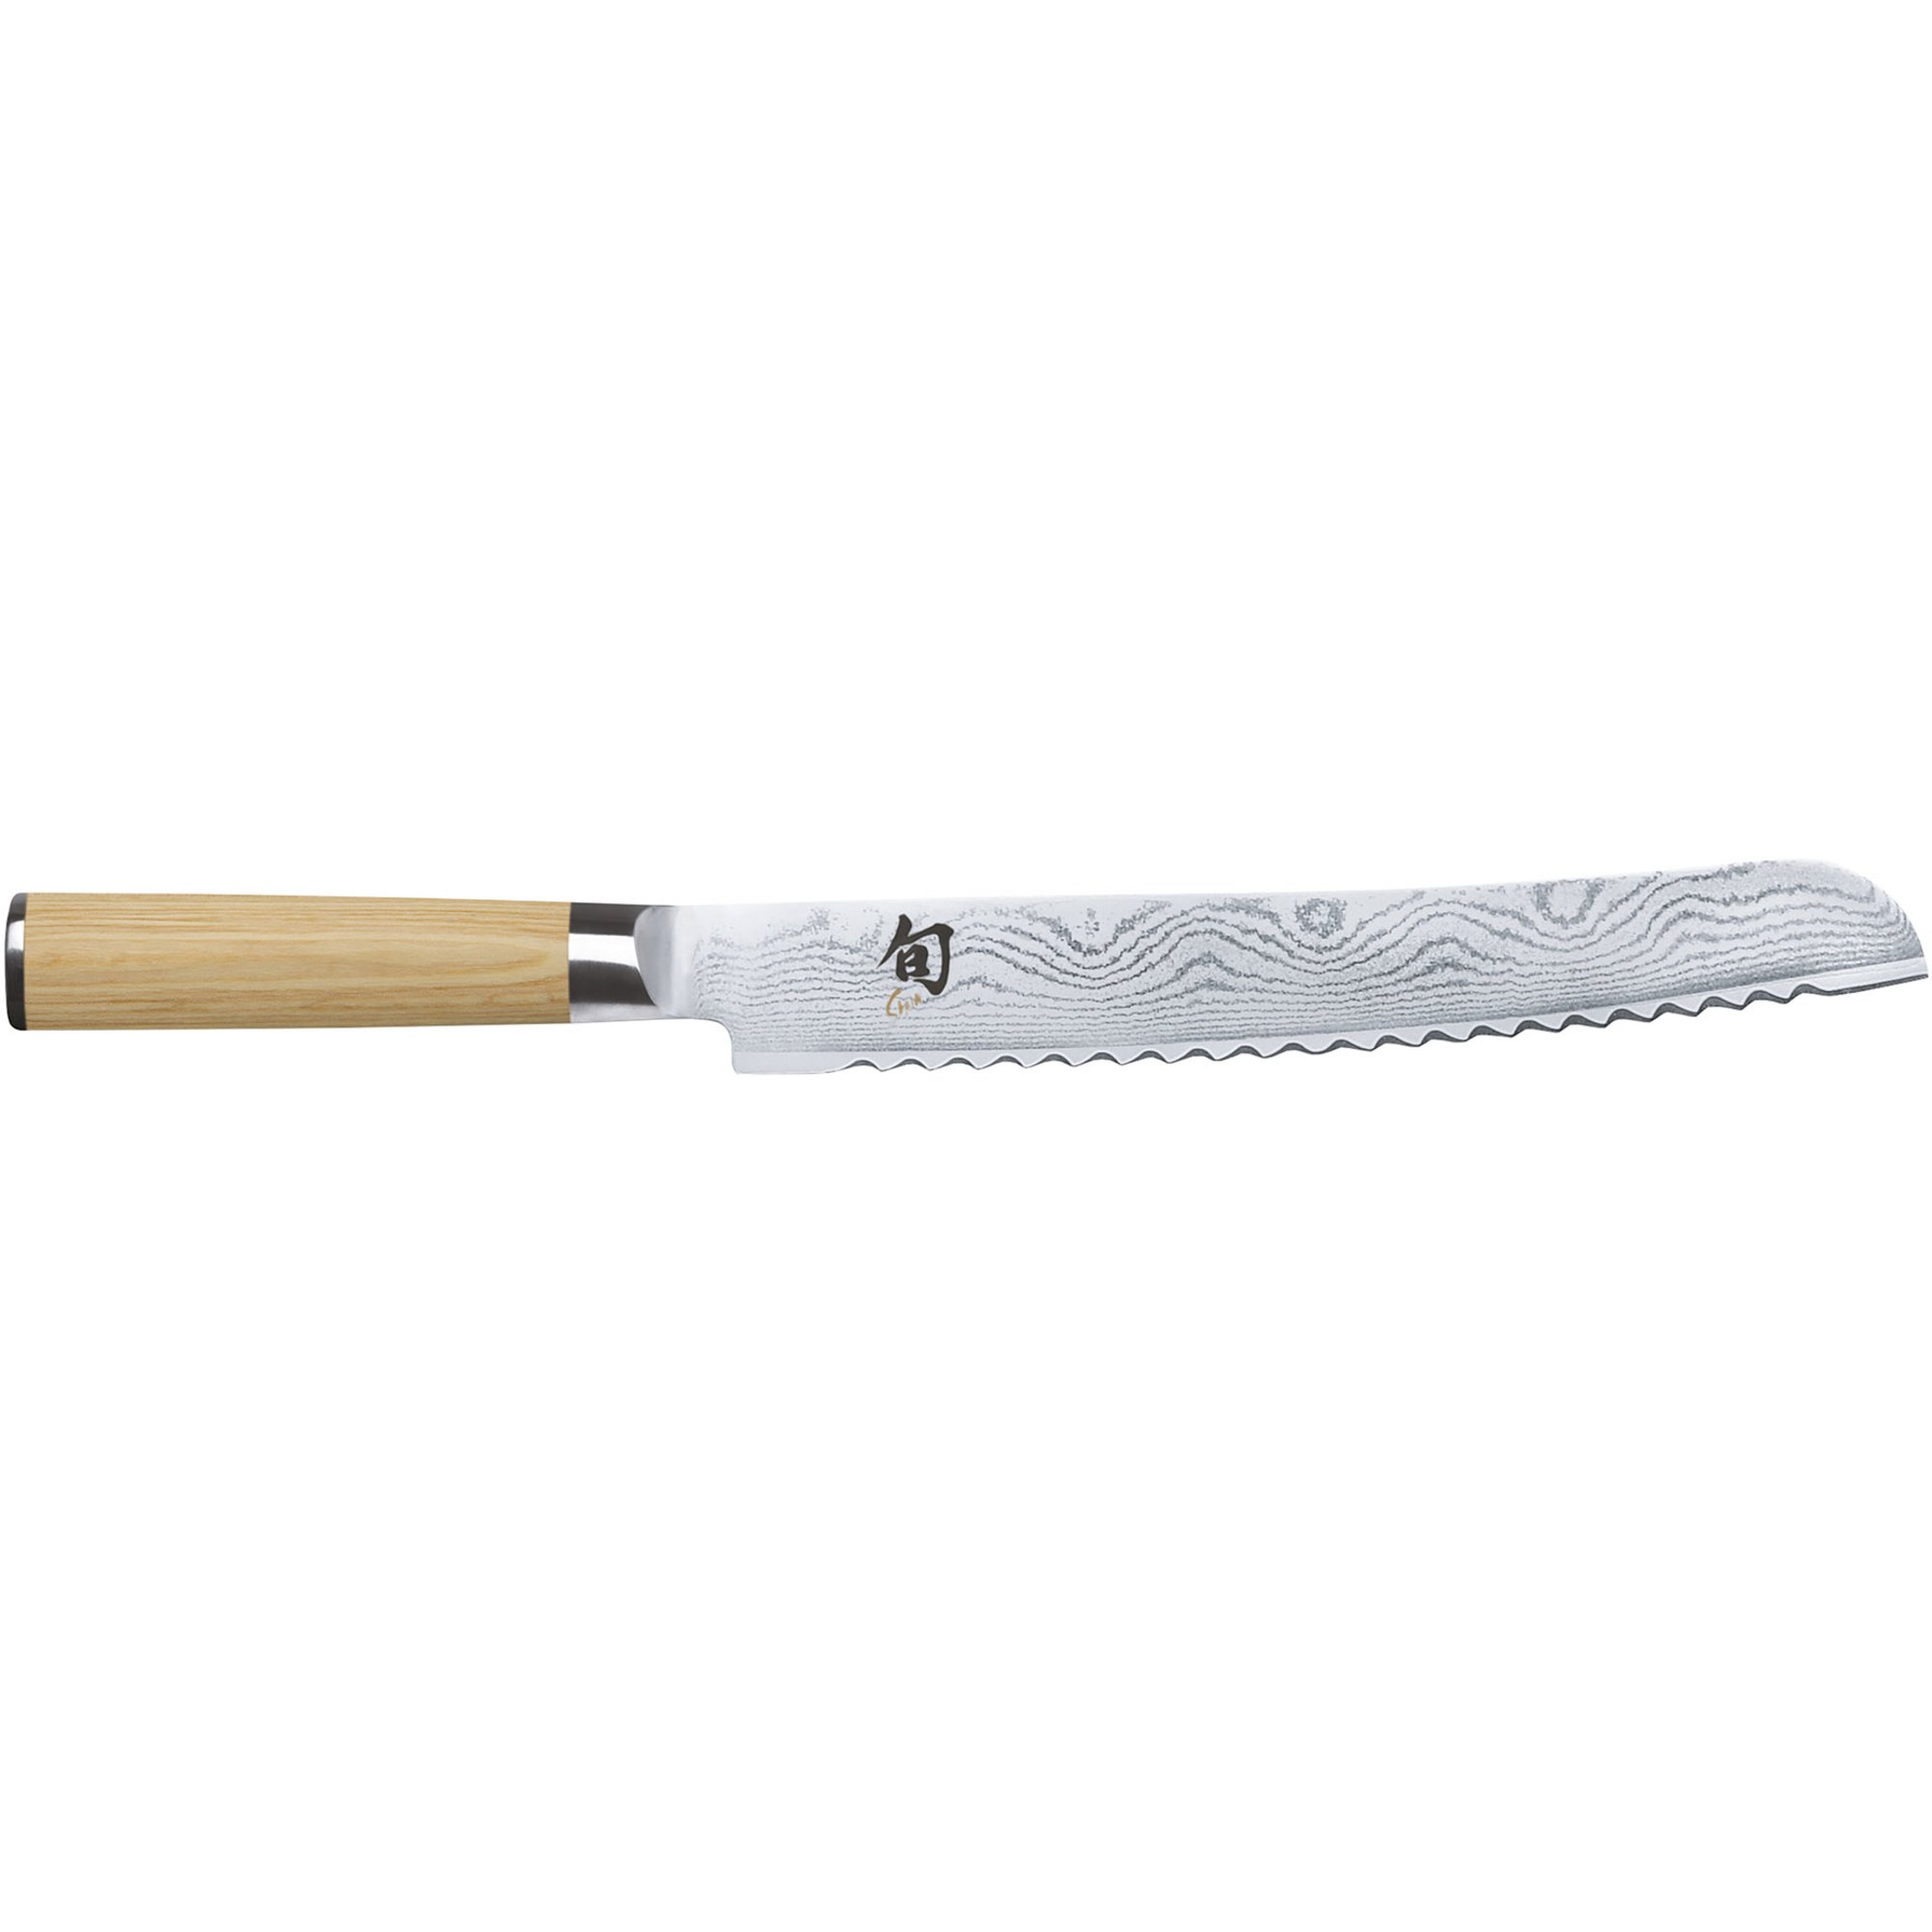 Kai Shun Classic White brødkniv, 23 cm